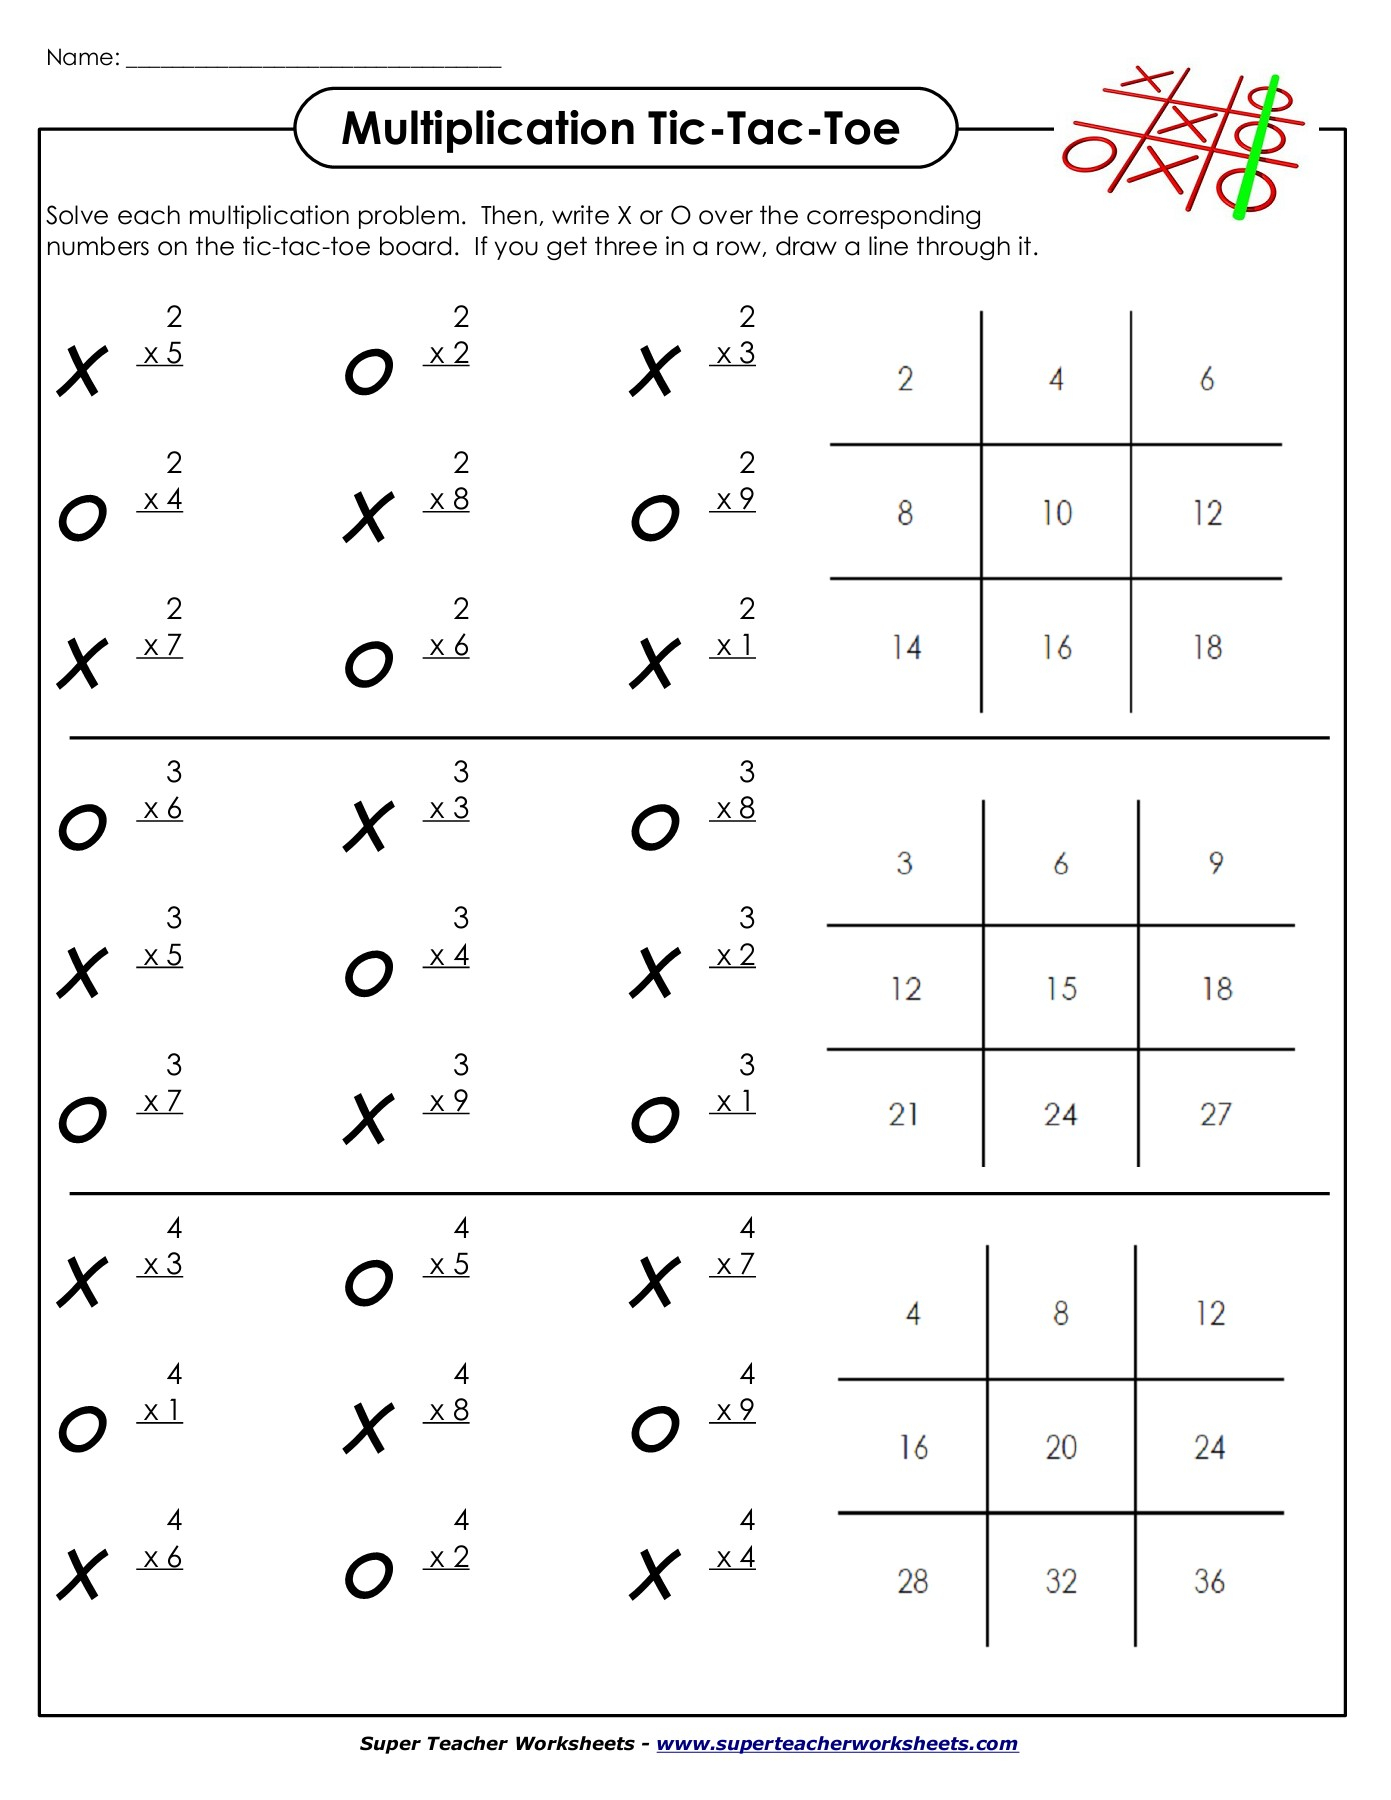 Name: Multiplication Tic-Tac-Toe - Super Teacher Worksheets inside Multiplication Worksheets X3 And X4